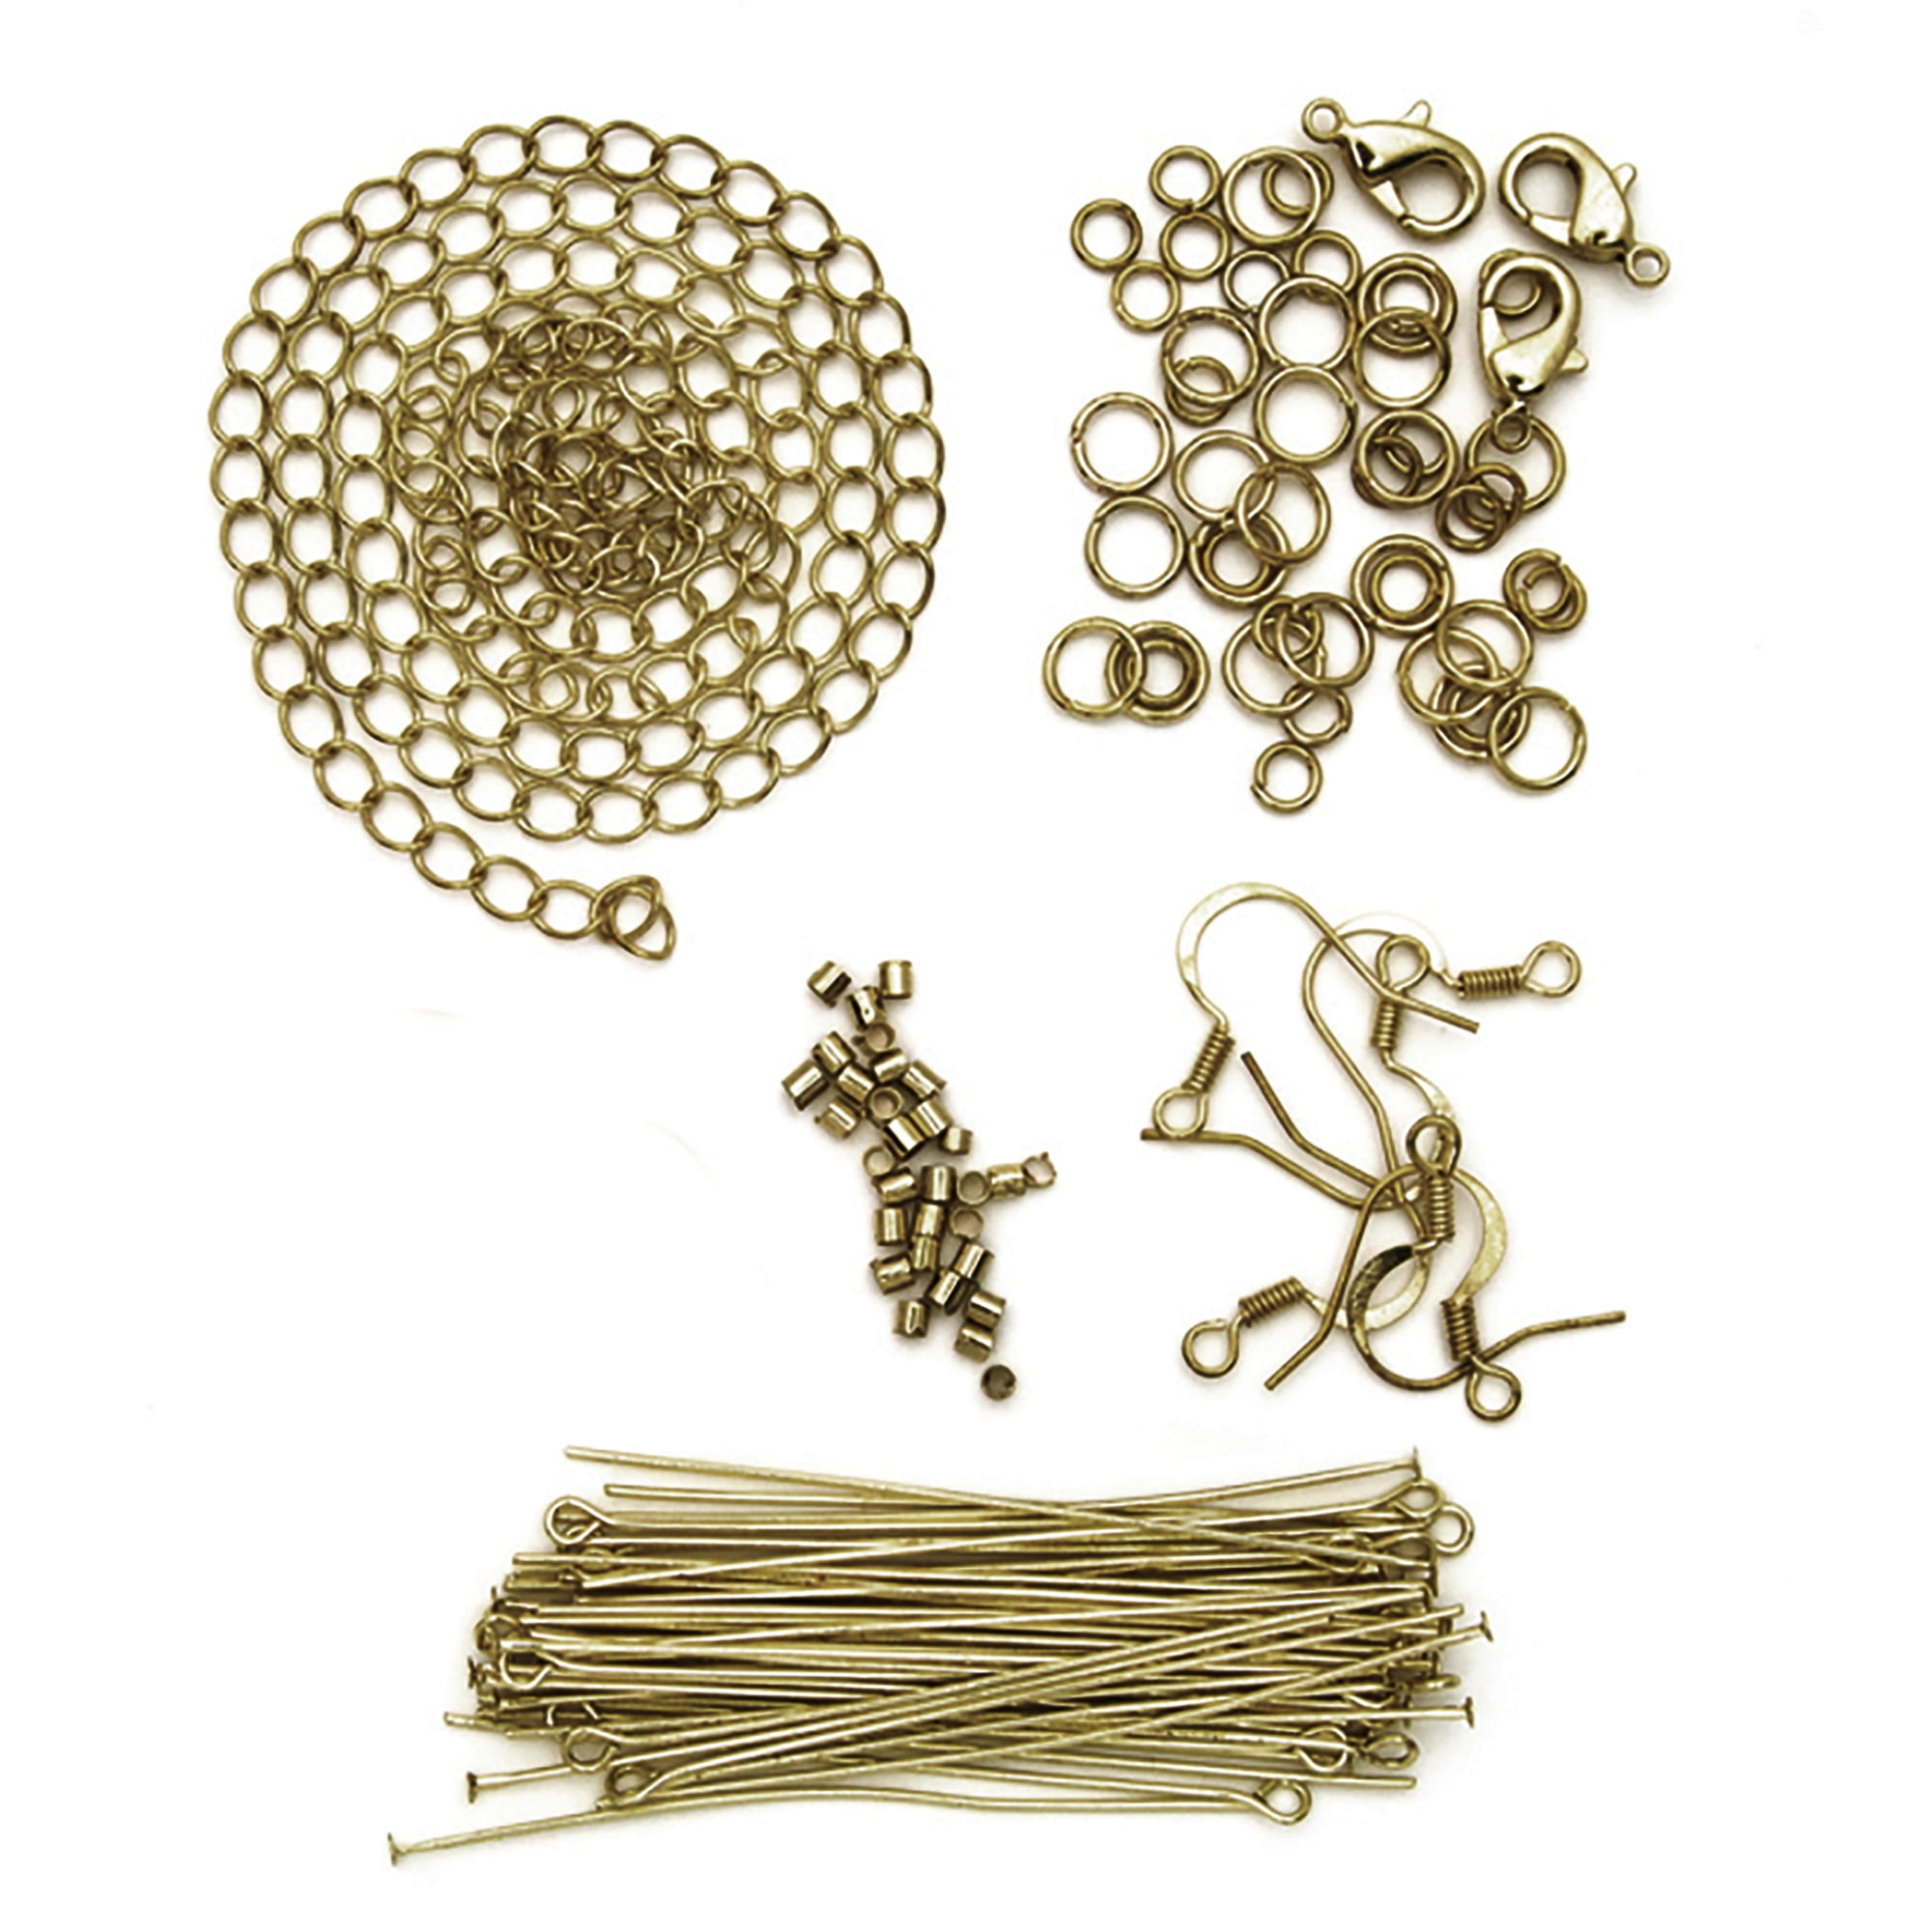 DIY Metal Bronze Jewelry-Making Findings Starter Pack, 75 piece